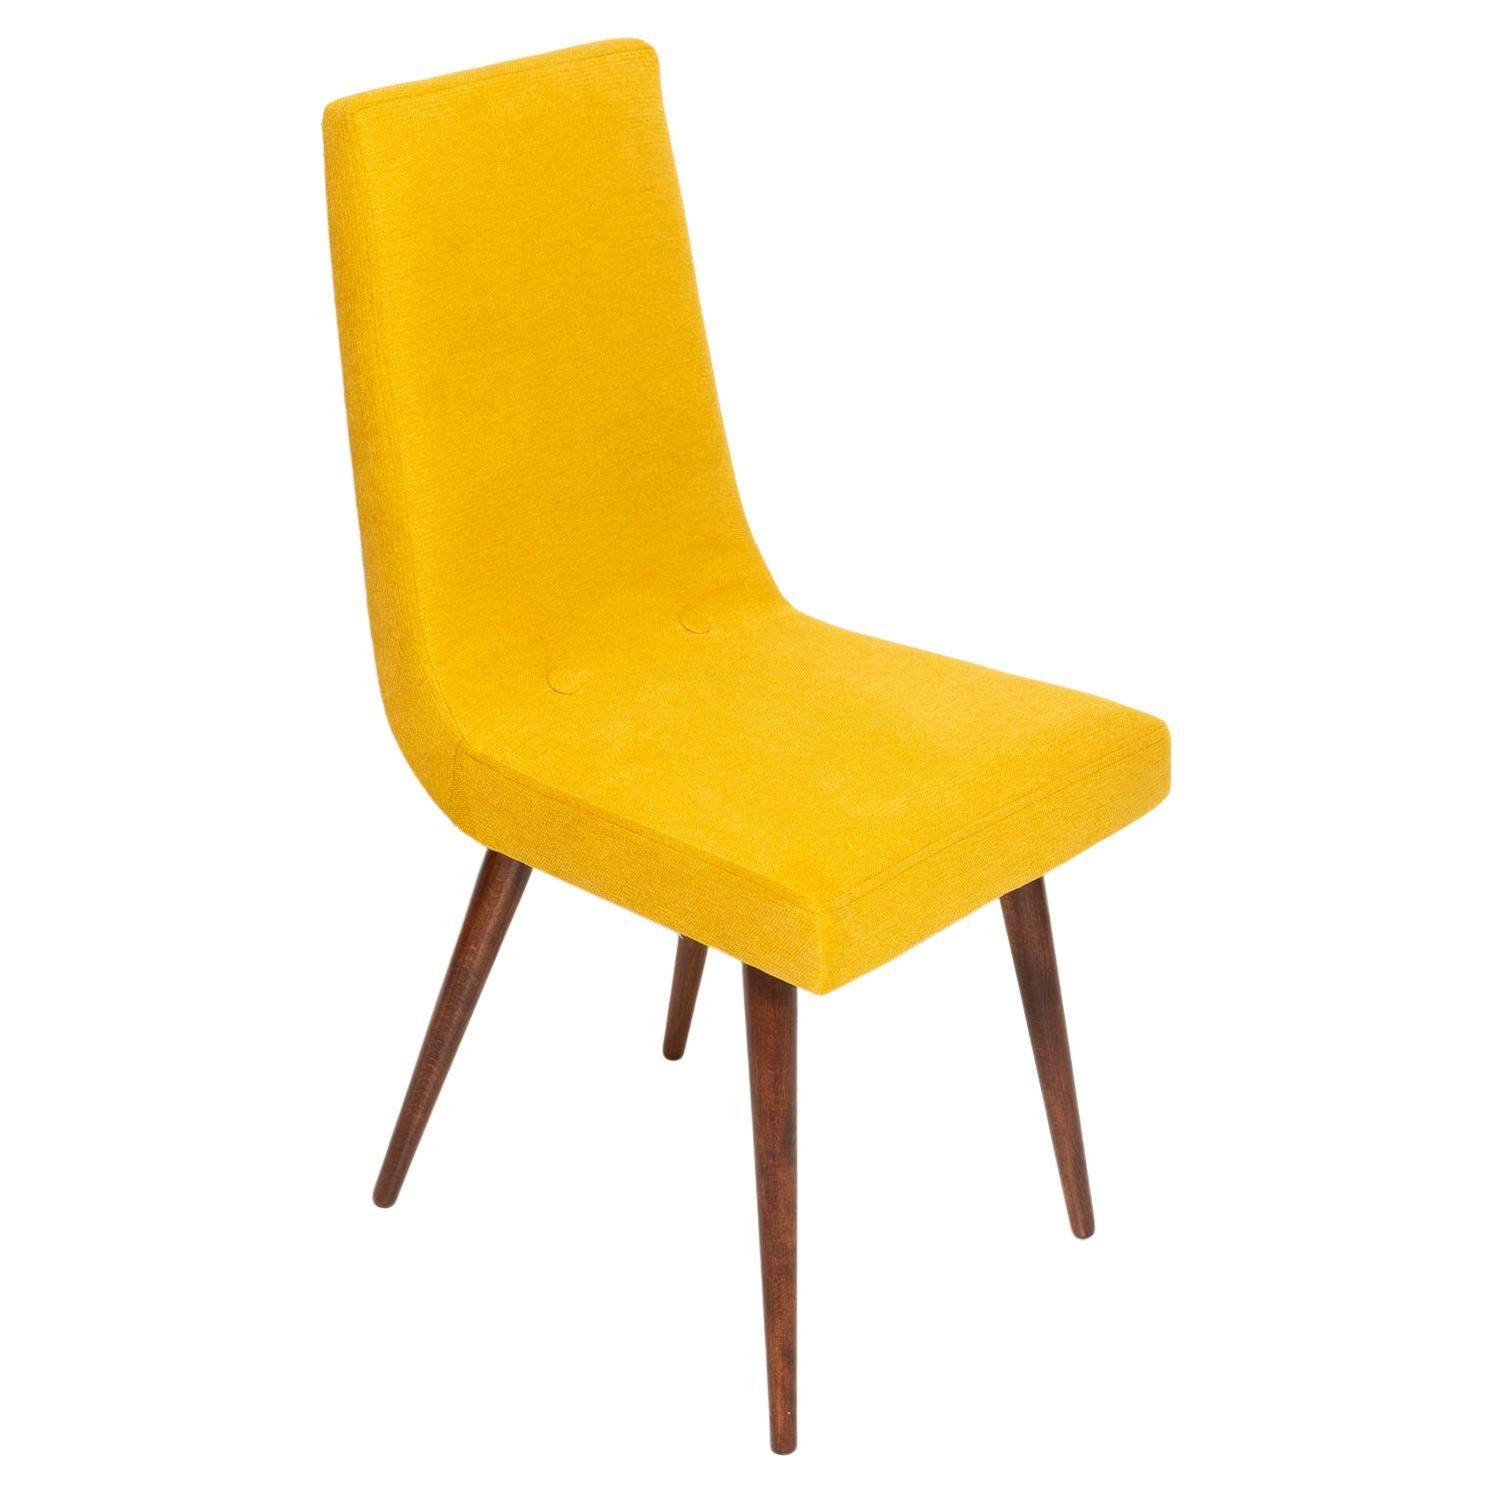 Midcentury Mustard Yellow Wool Chair, Rajmund Halas, Europe, 1960s